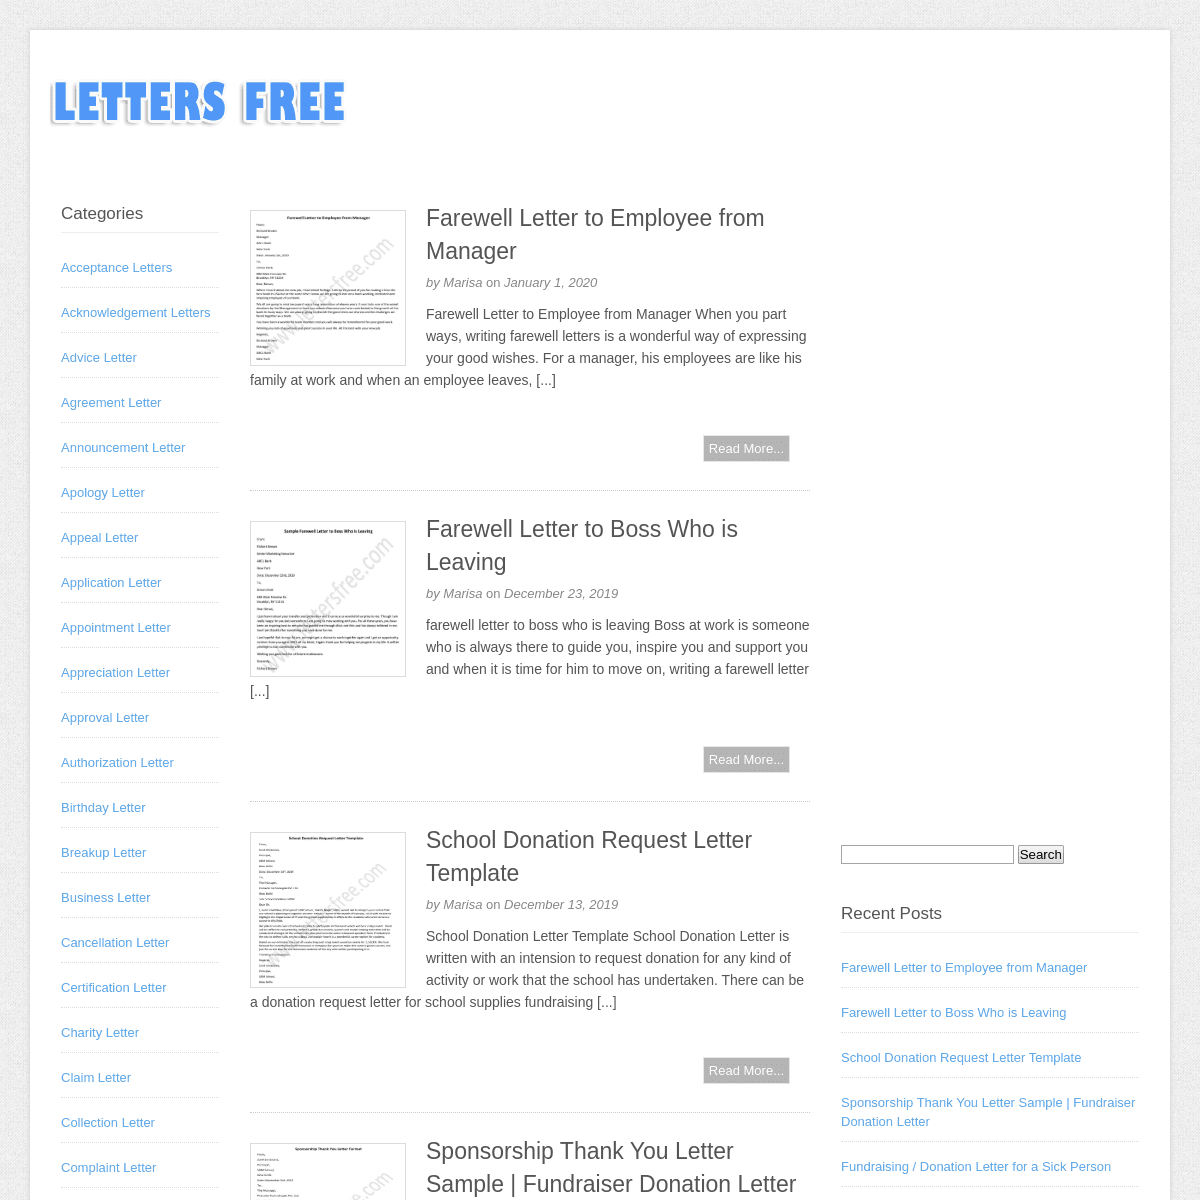 A complete backup of lettersfree.com